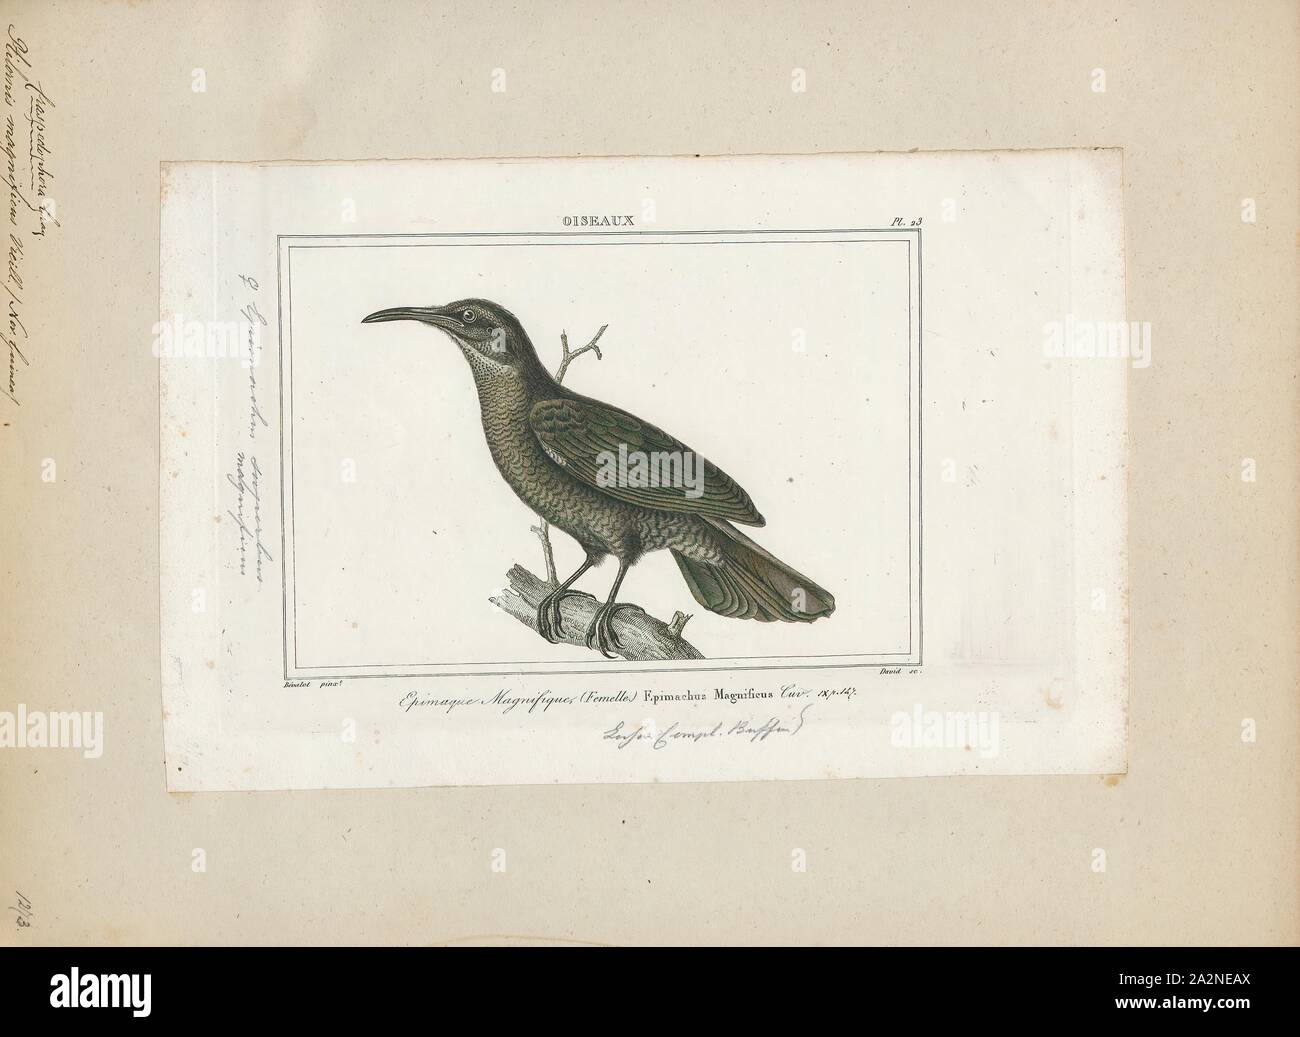 Ptilornis magnificus, Print, 1838 Stock Photo